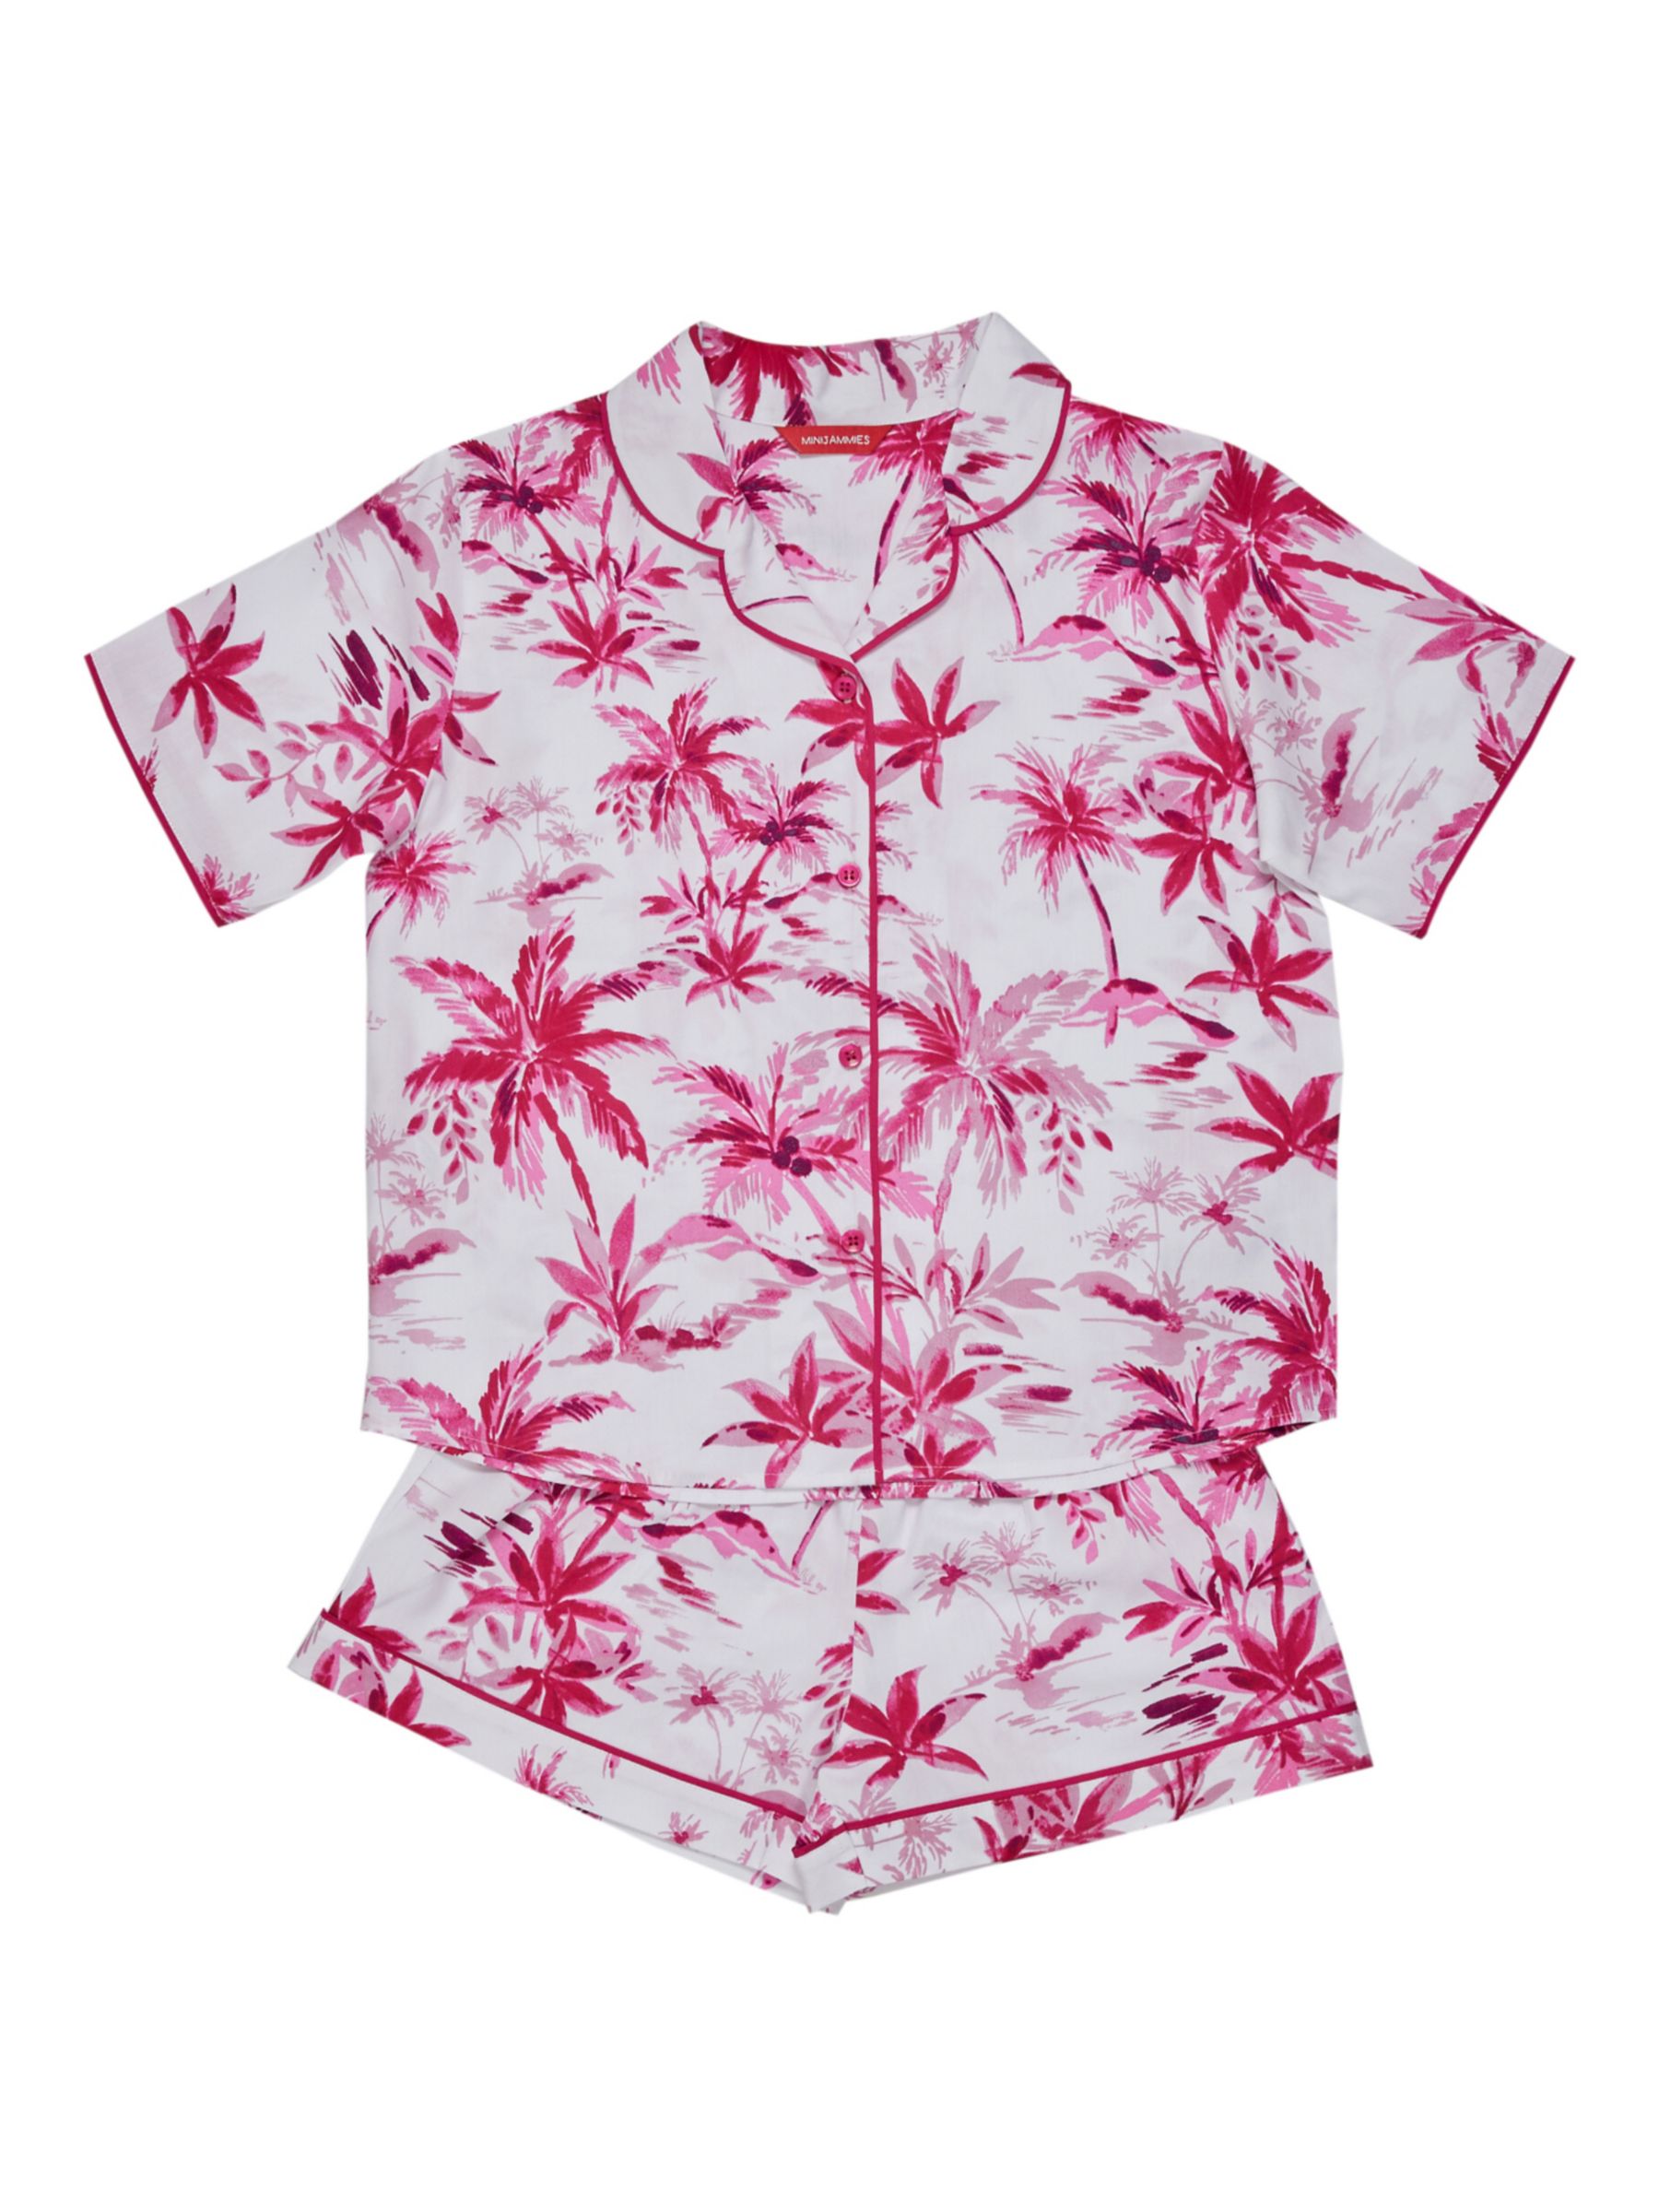 Minijammies Hailey Palm Print Shorty Pyjama Set, Pink/White, 8-9 years